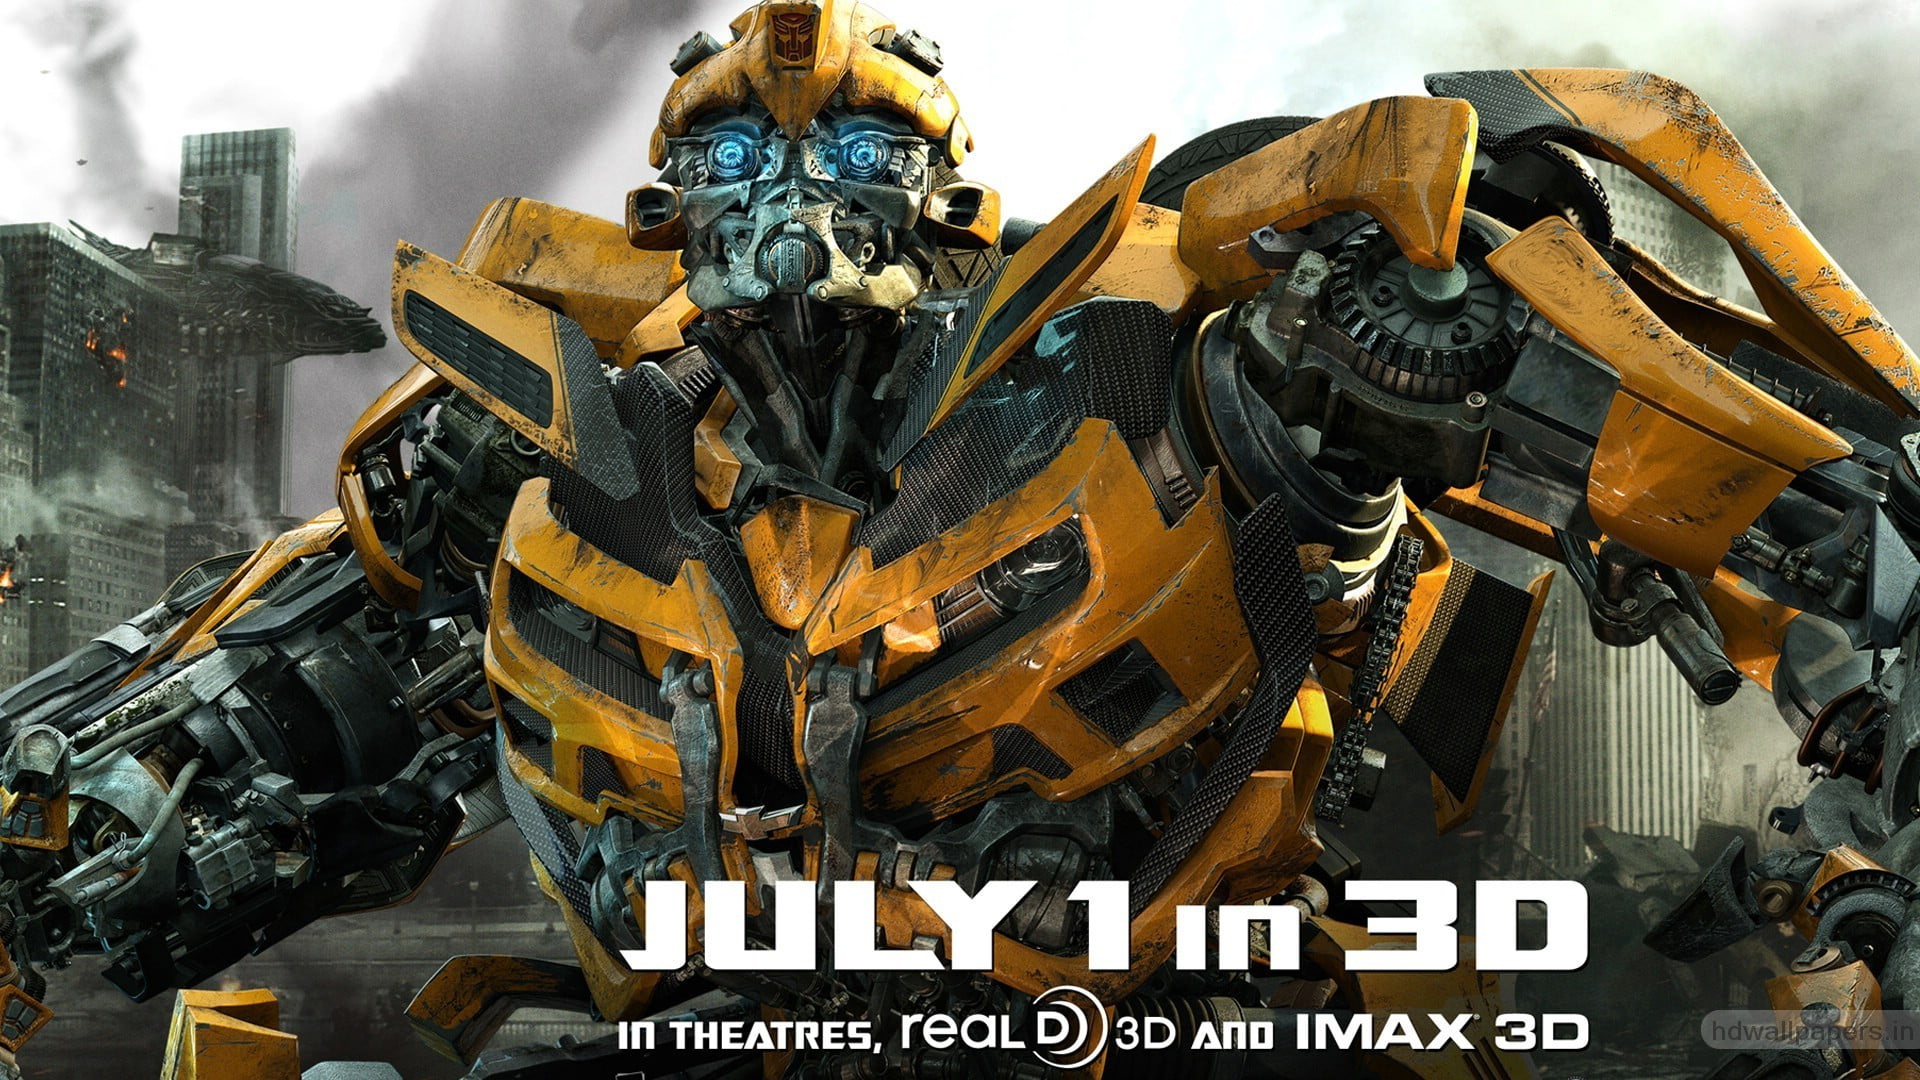 Bumblebee poster, movies, Transformers, Bumblebee